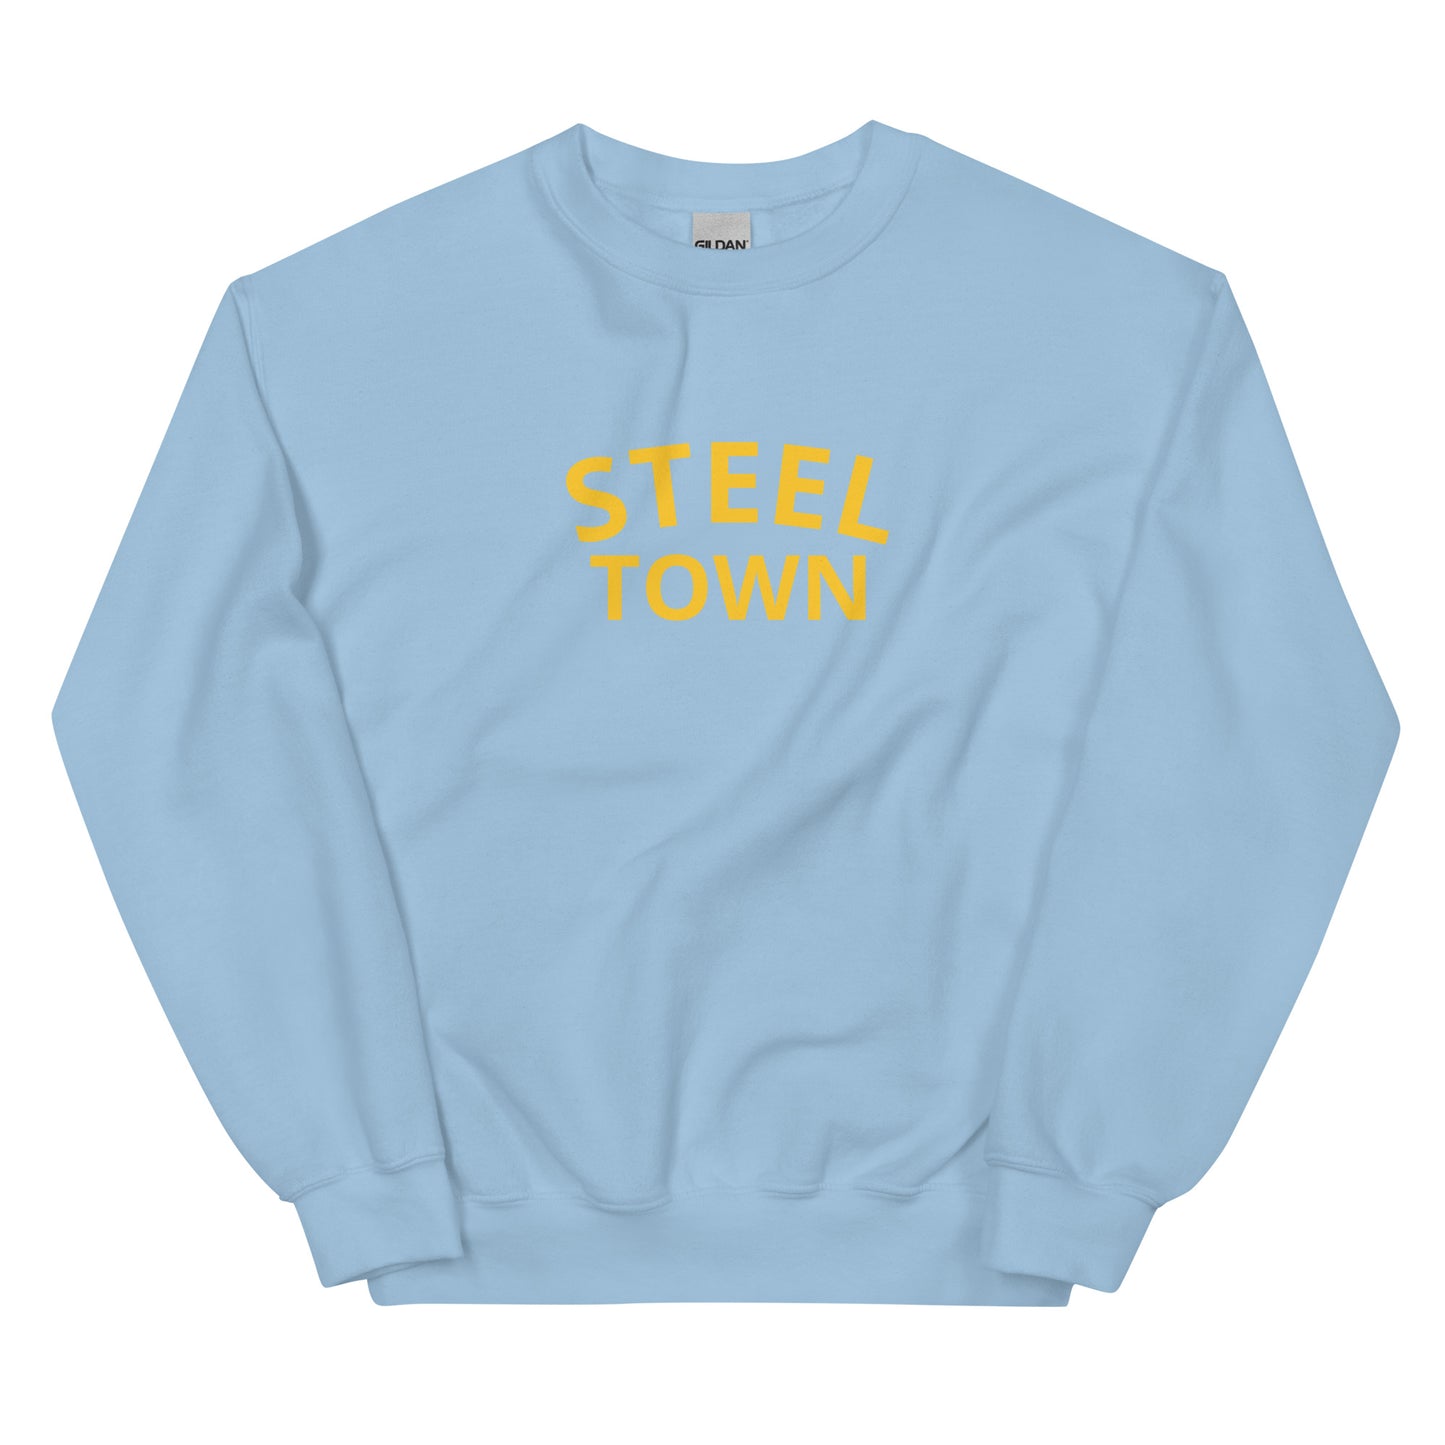 STEEL TOWN Logo Unisex Sweatshirt